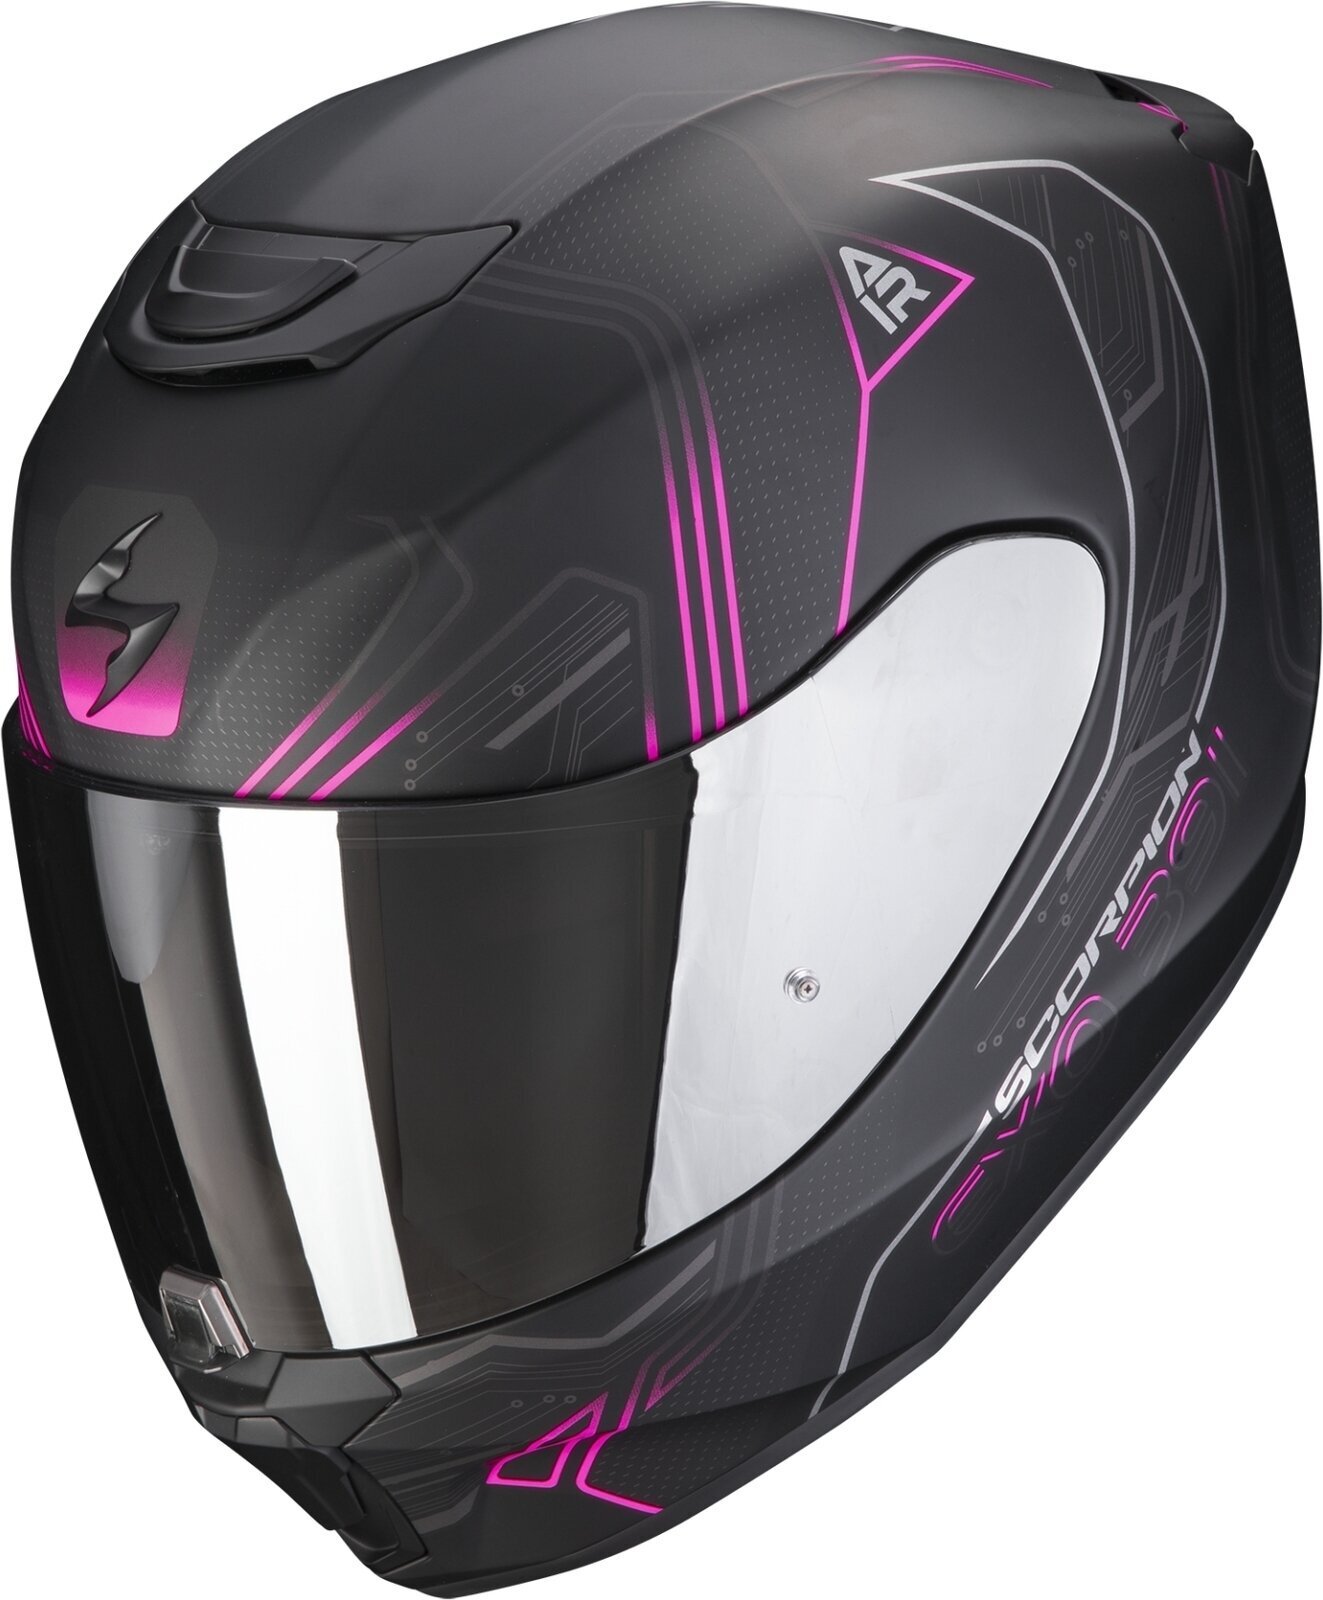 Helmet Scorpion EXO 391 SPADA Matt Black/Pink S Helmet